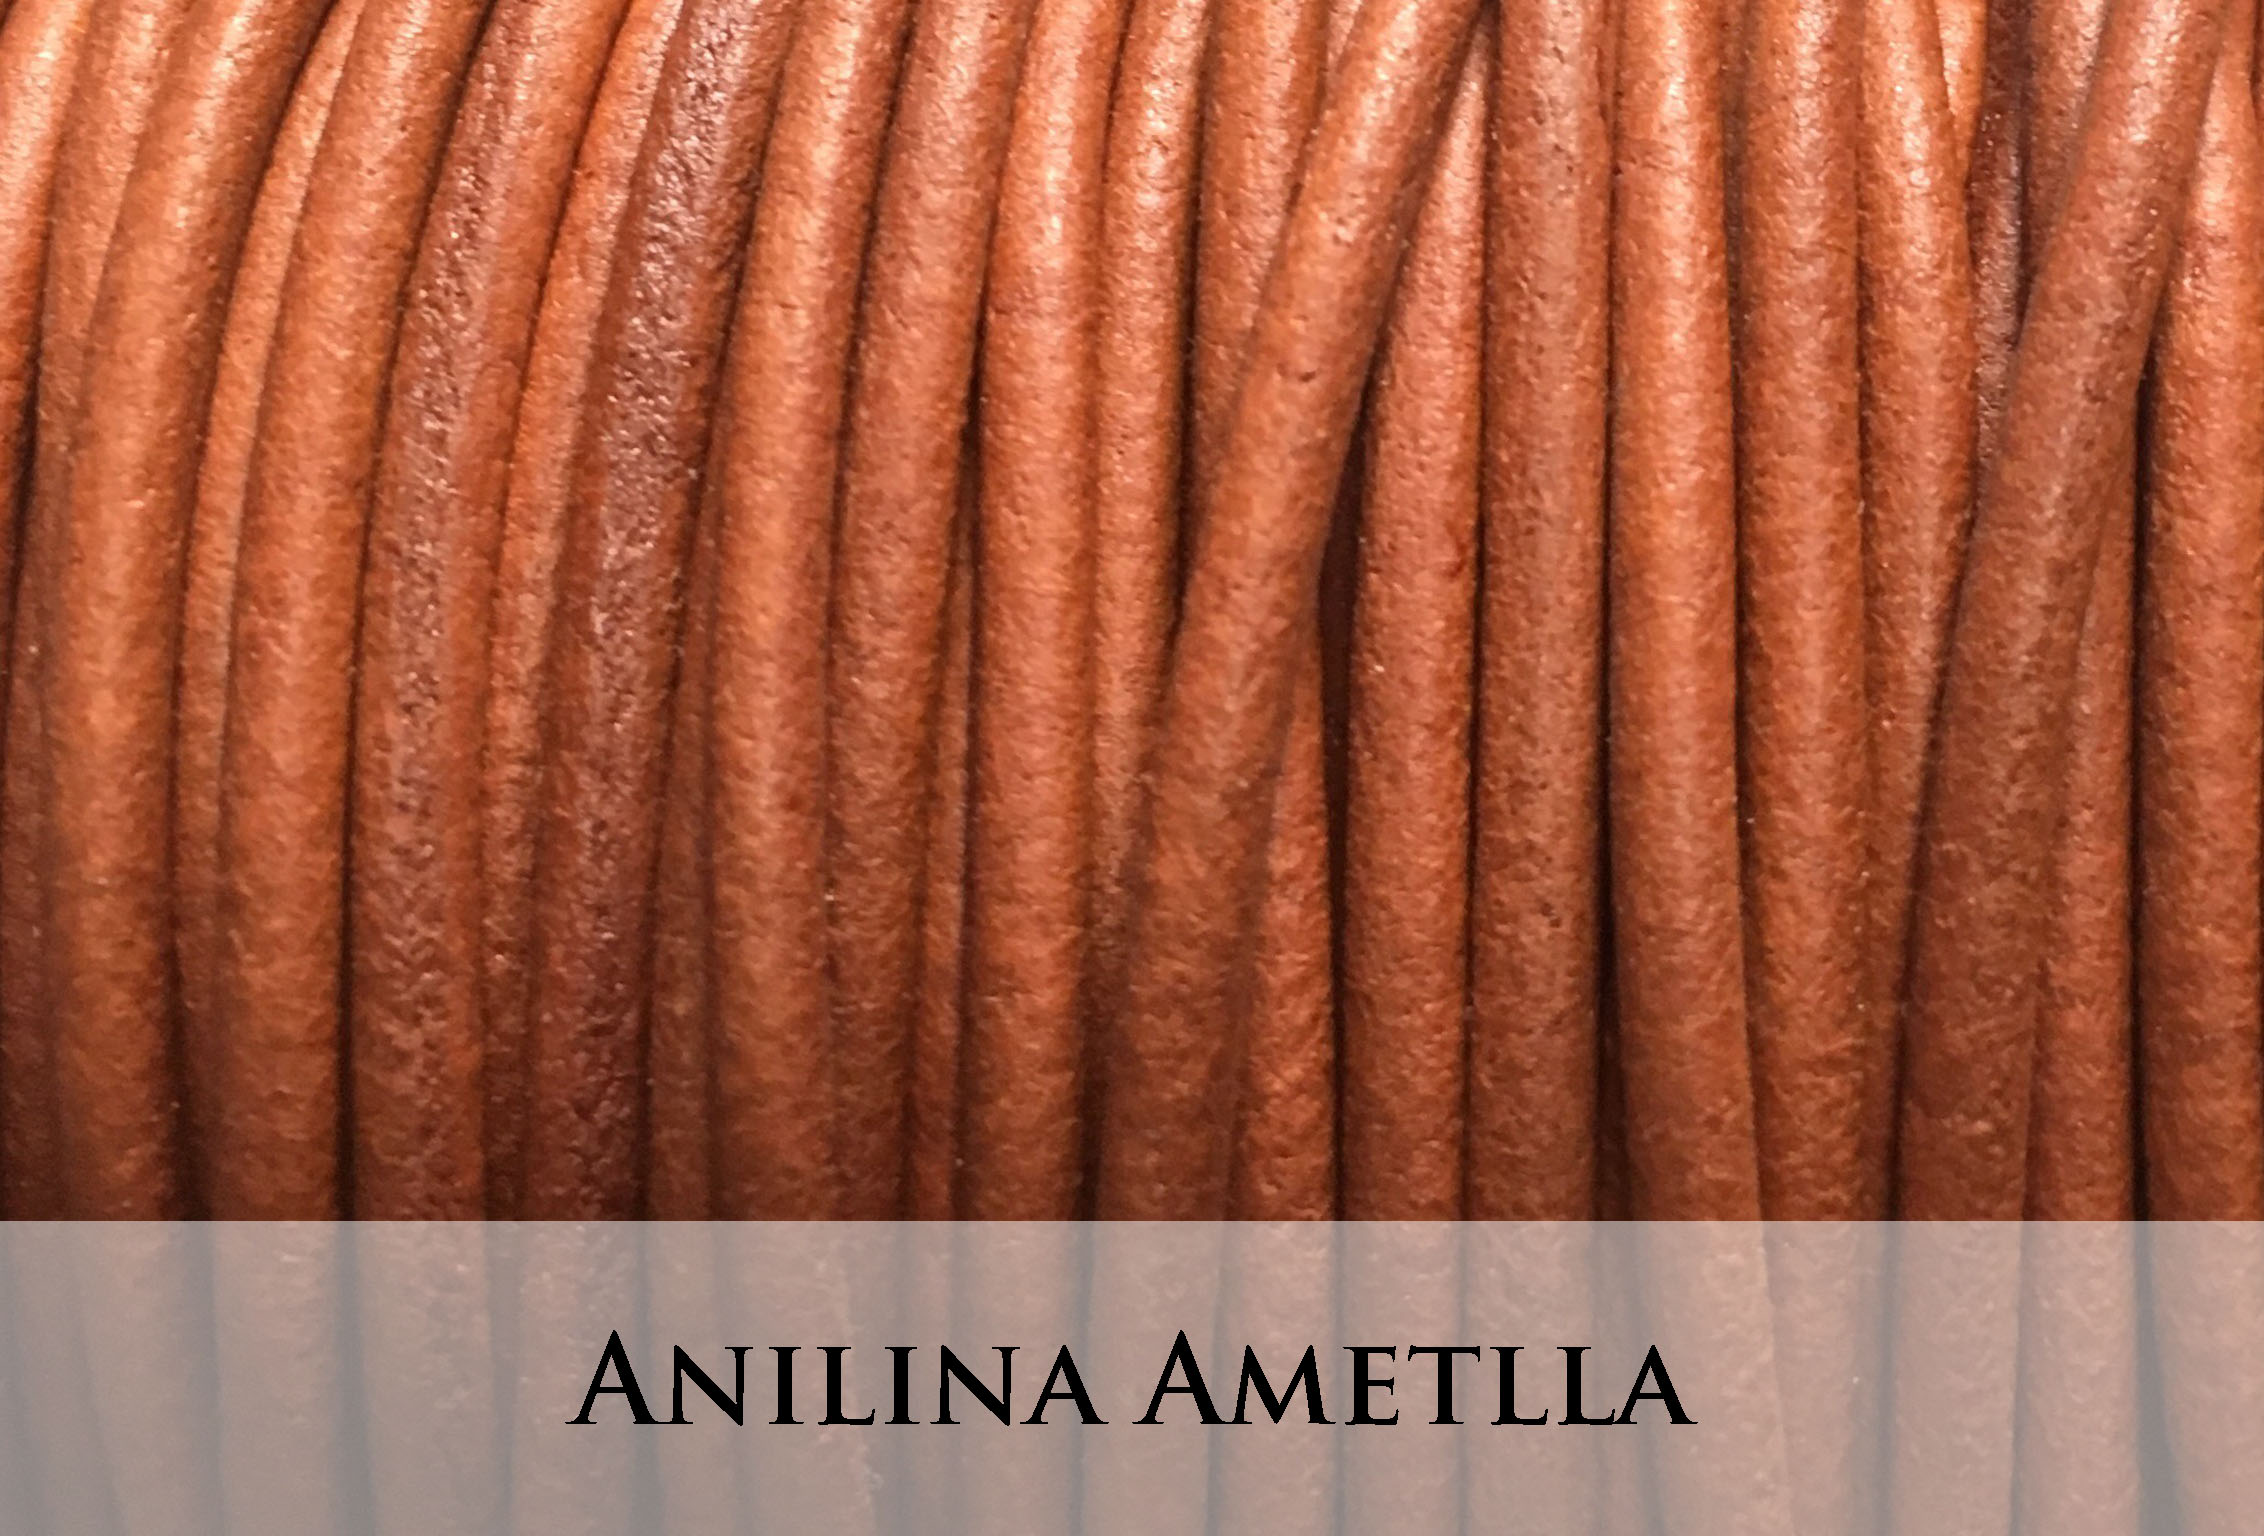 Anilina Ametlla